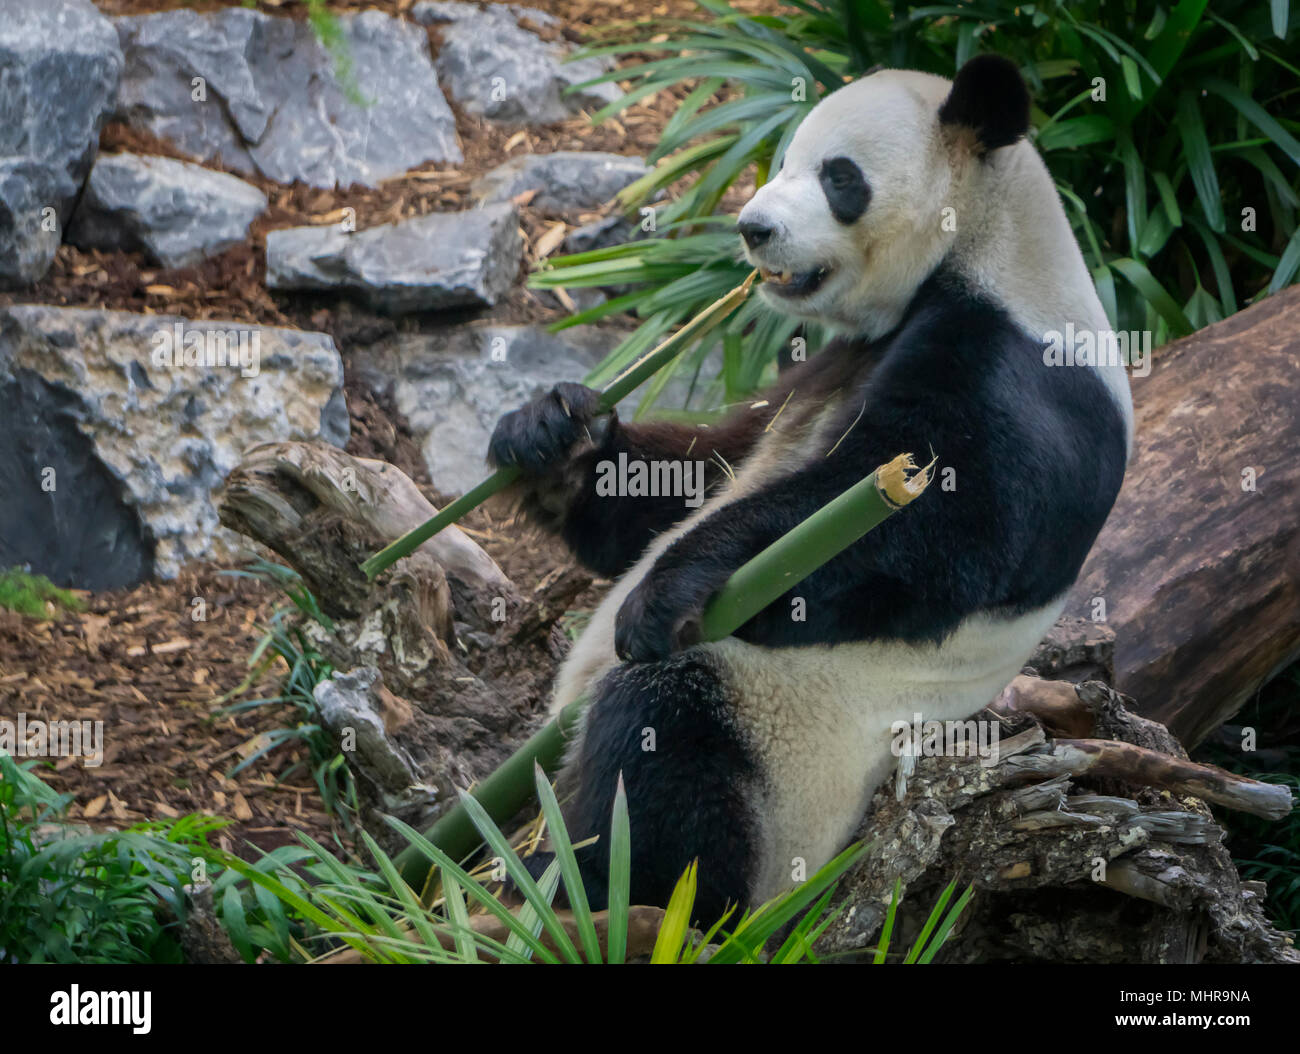 Calgary zoo panda hi-res stock photography and images - Alamy